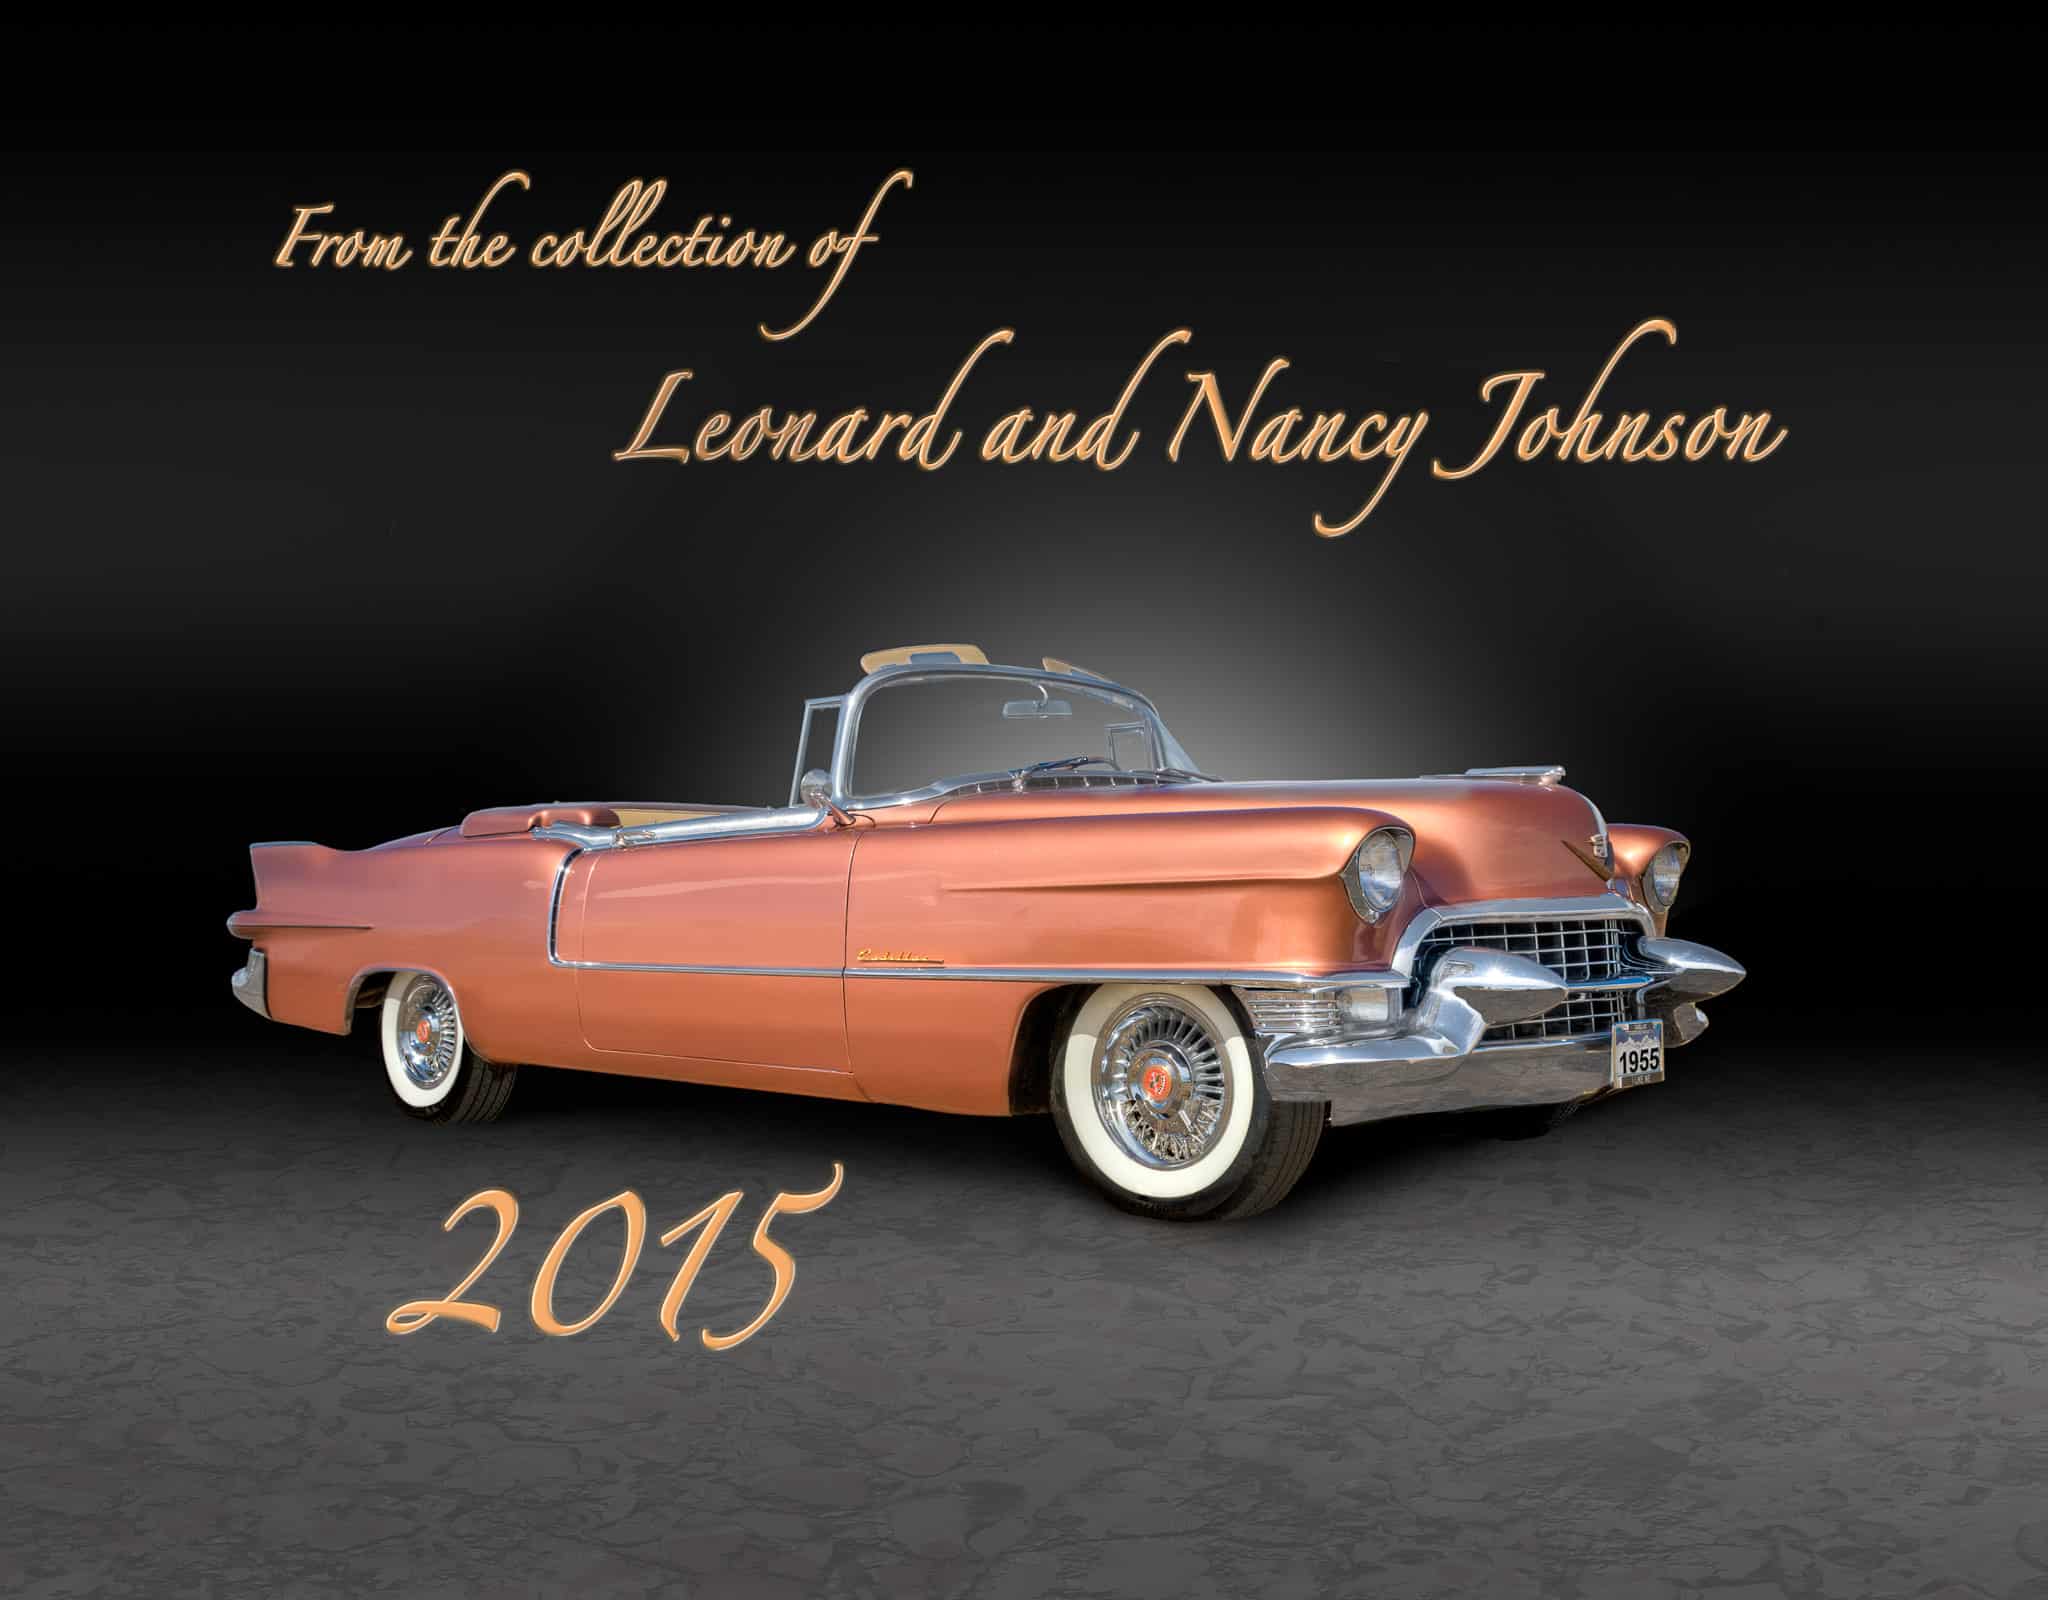 1955 Cadillac Eldorado Biarritz Cover - 2015 Classic Car Calendar